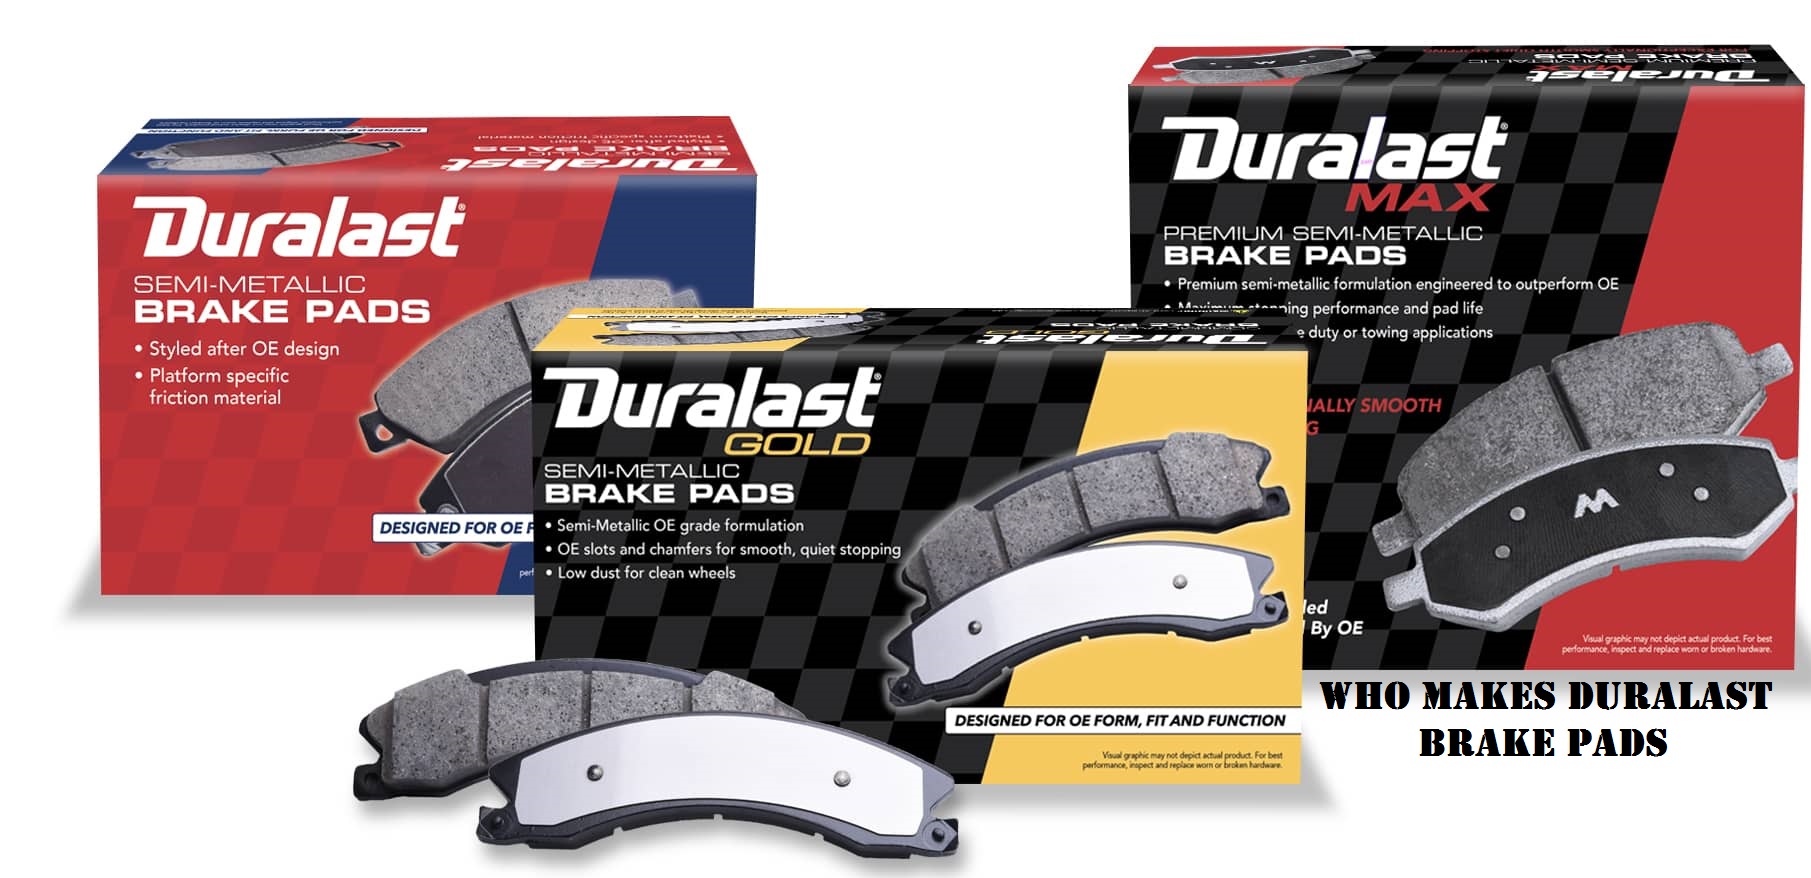 Who Makes Duralast Brake Pads